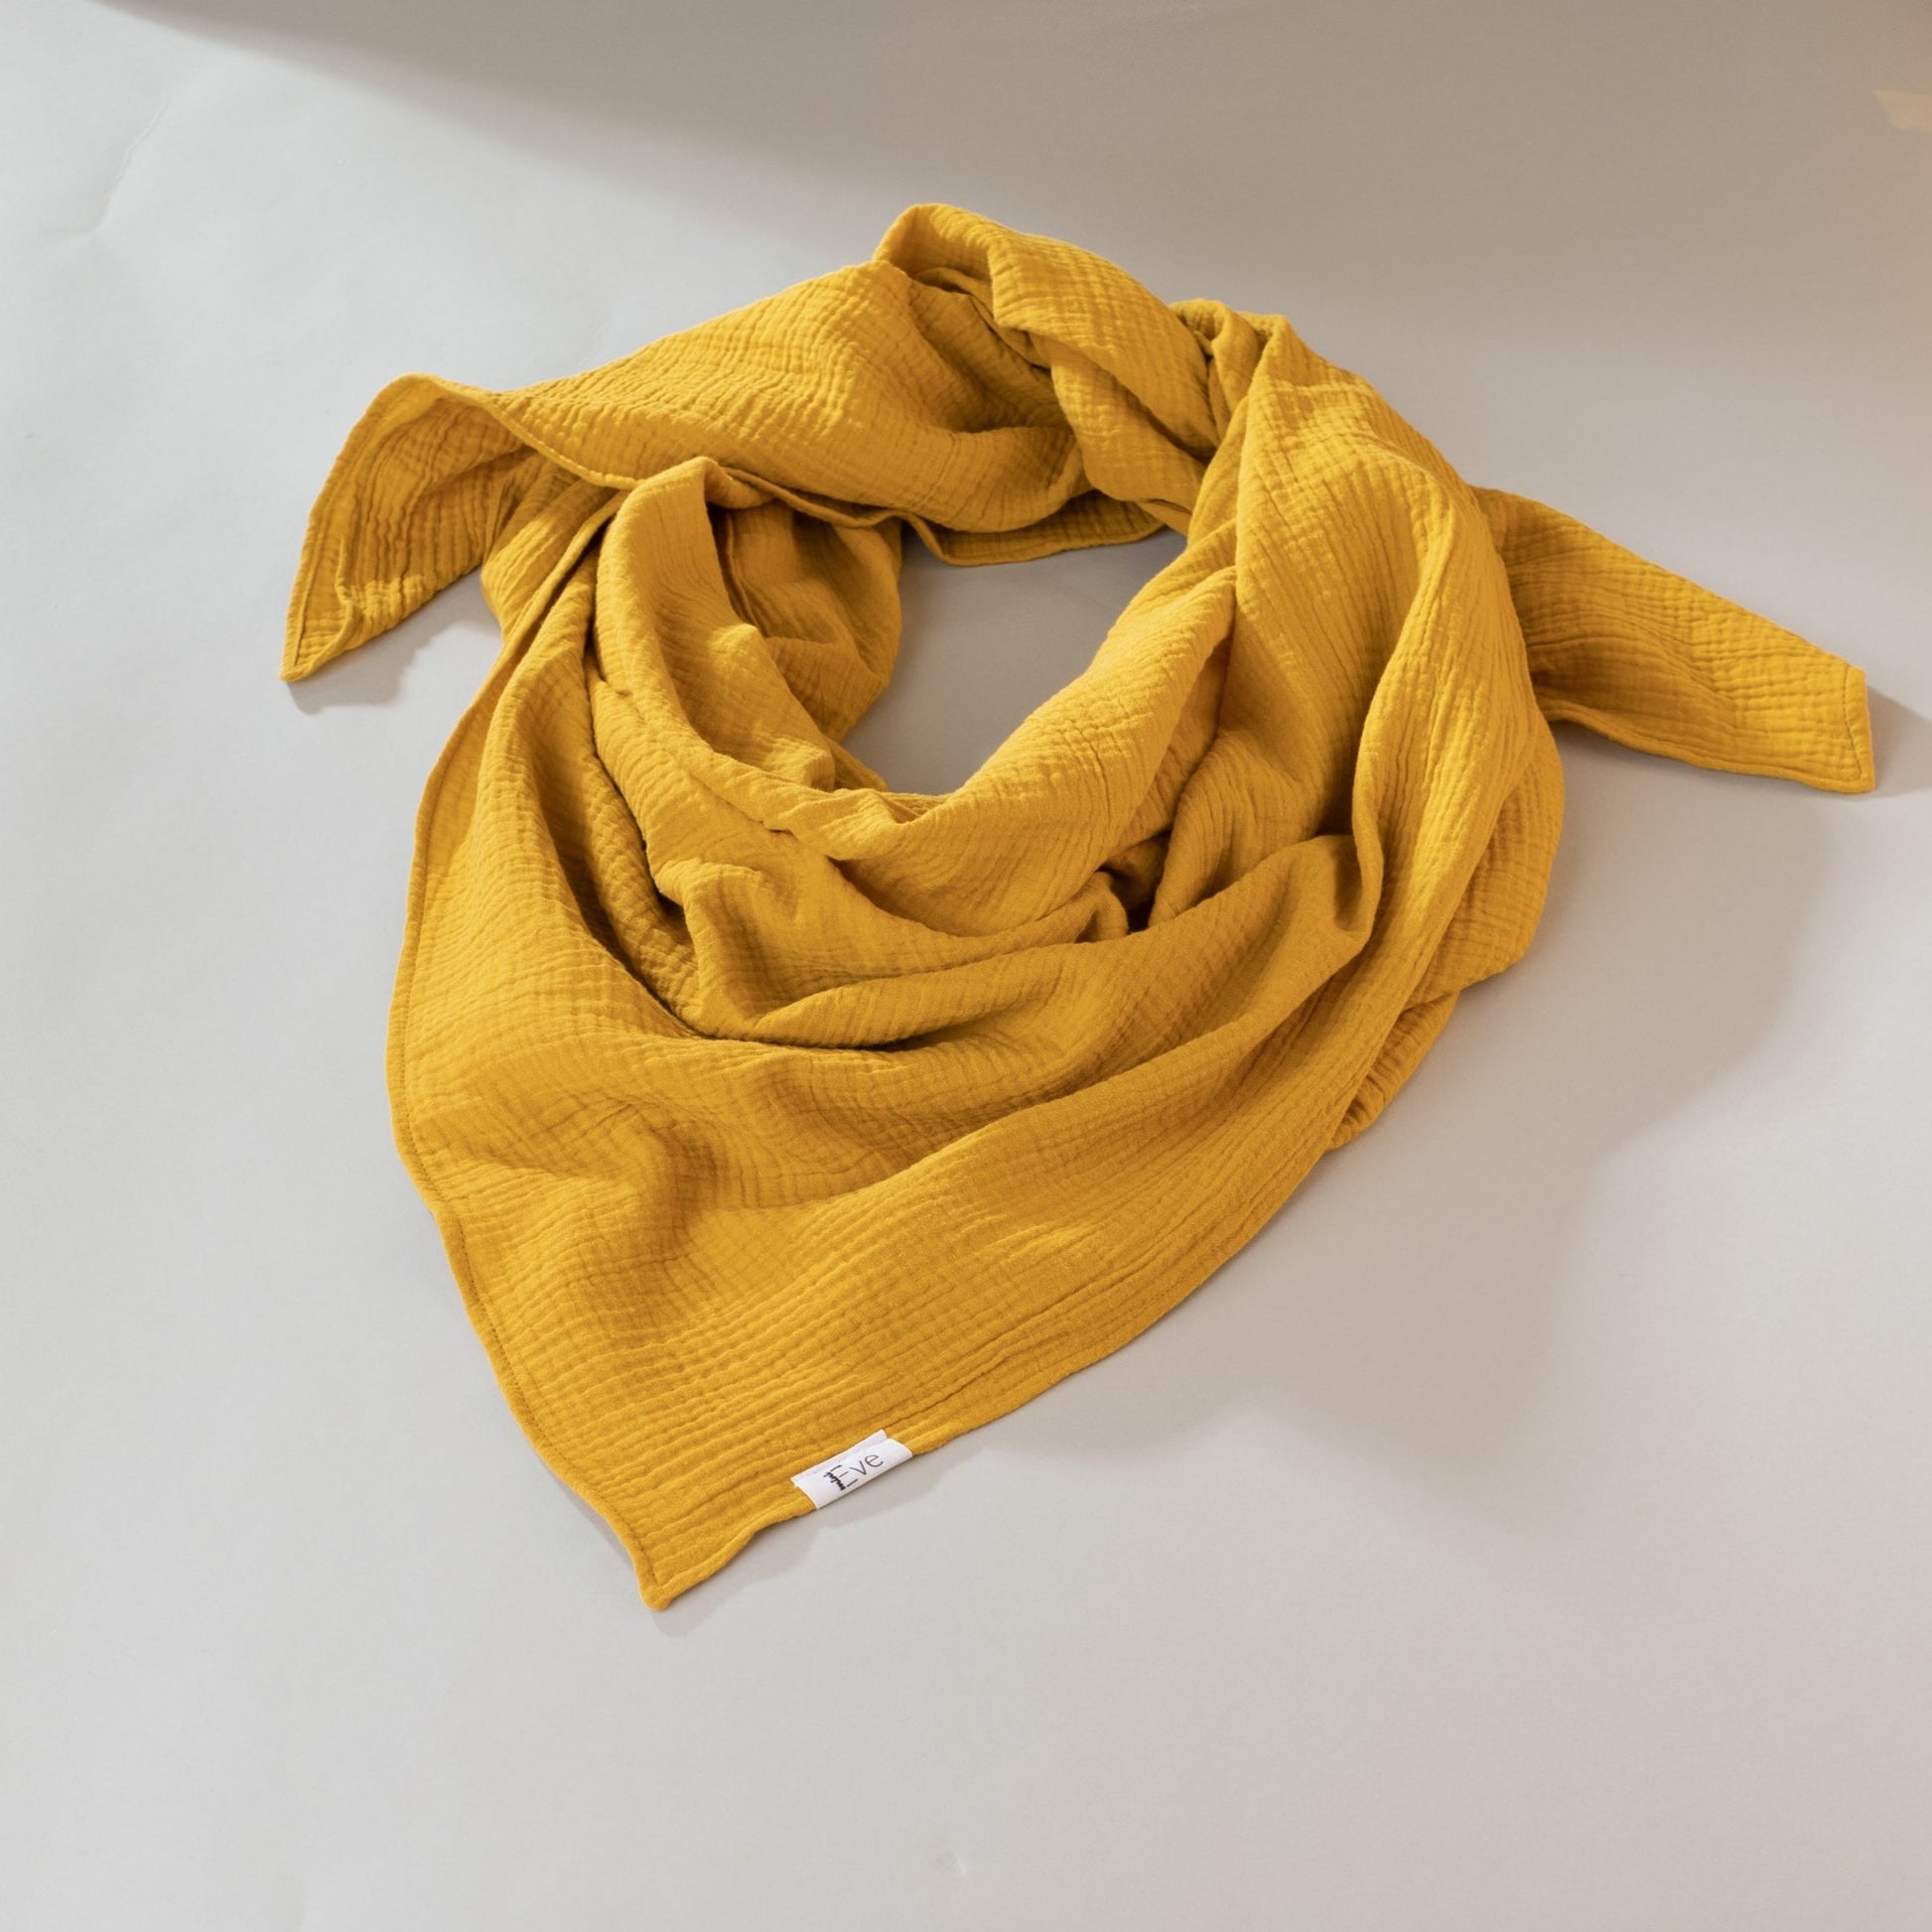 XL Musselin-Tuch in curry gelb, extra groß, Urheber: Mini & Eve